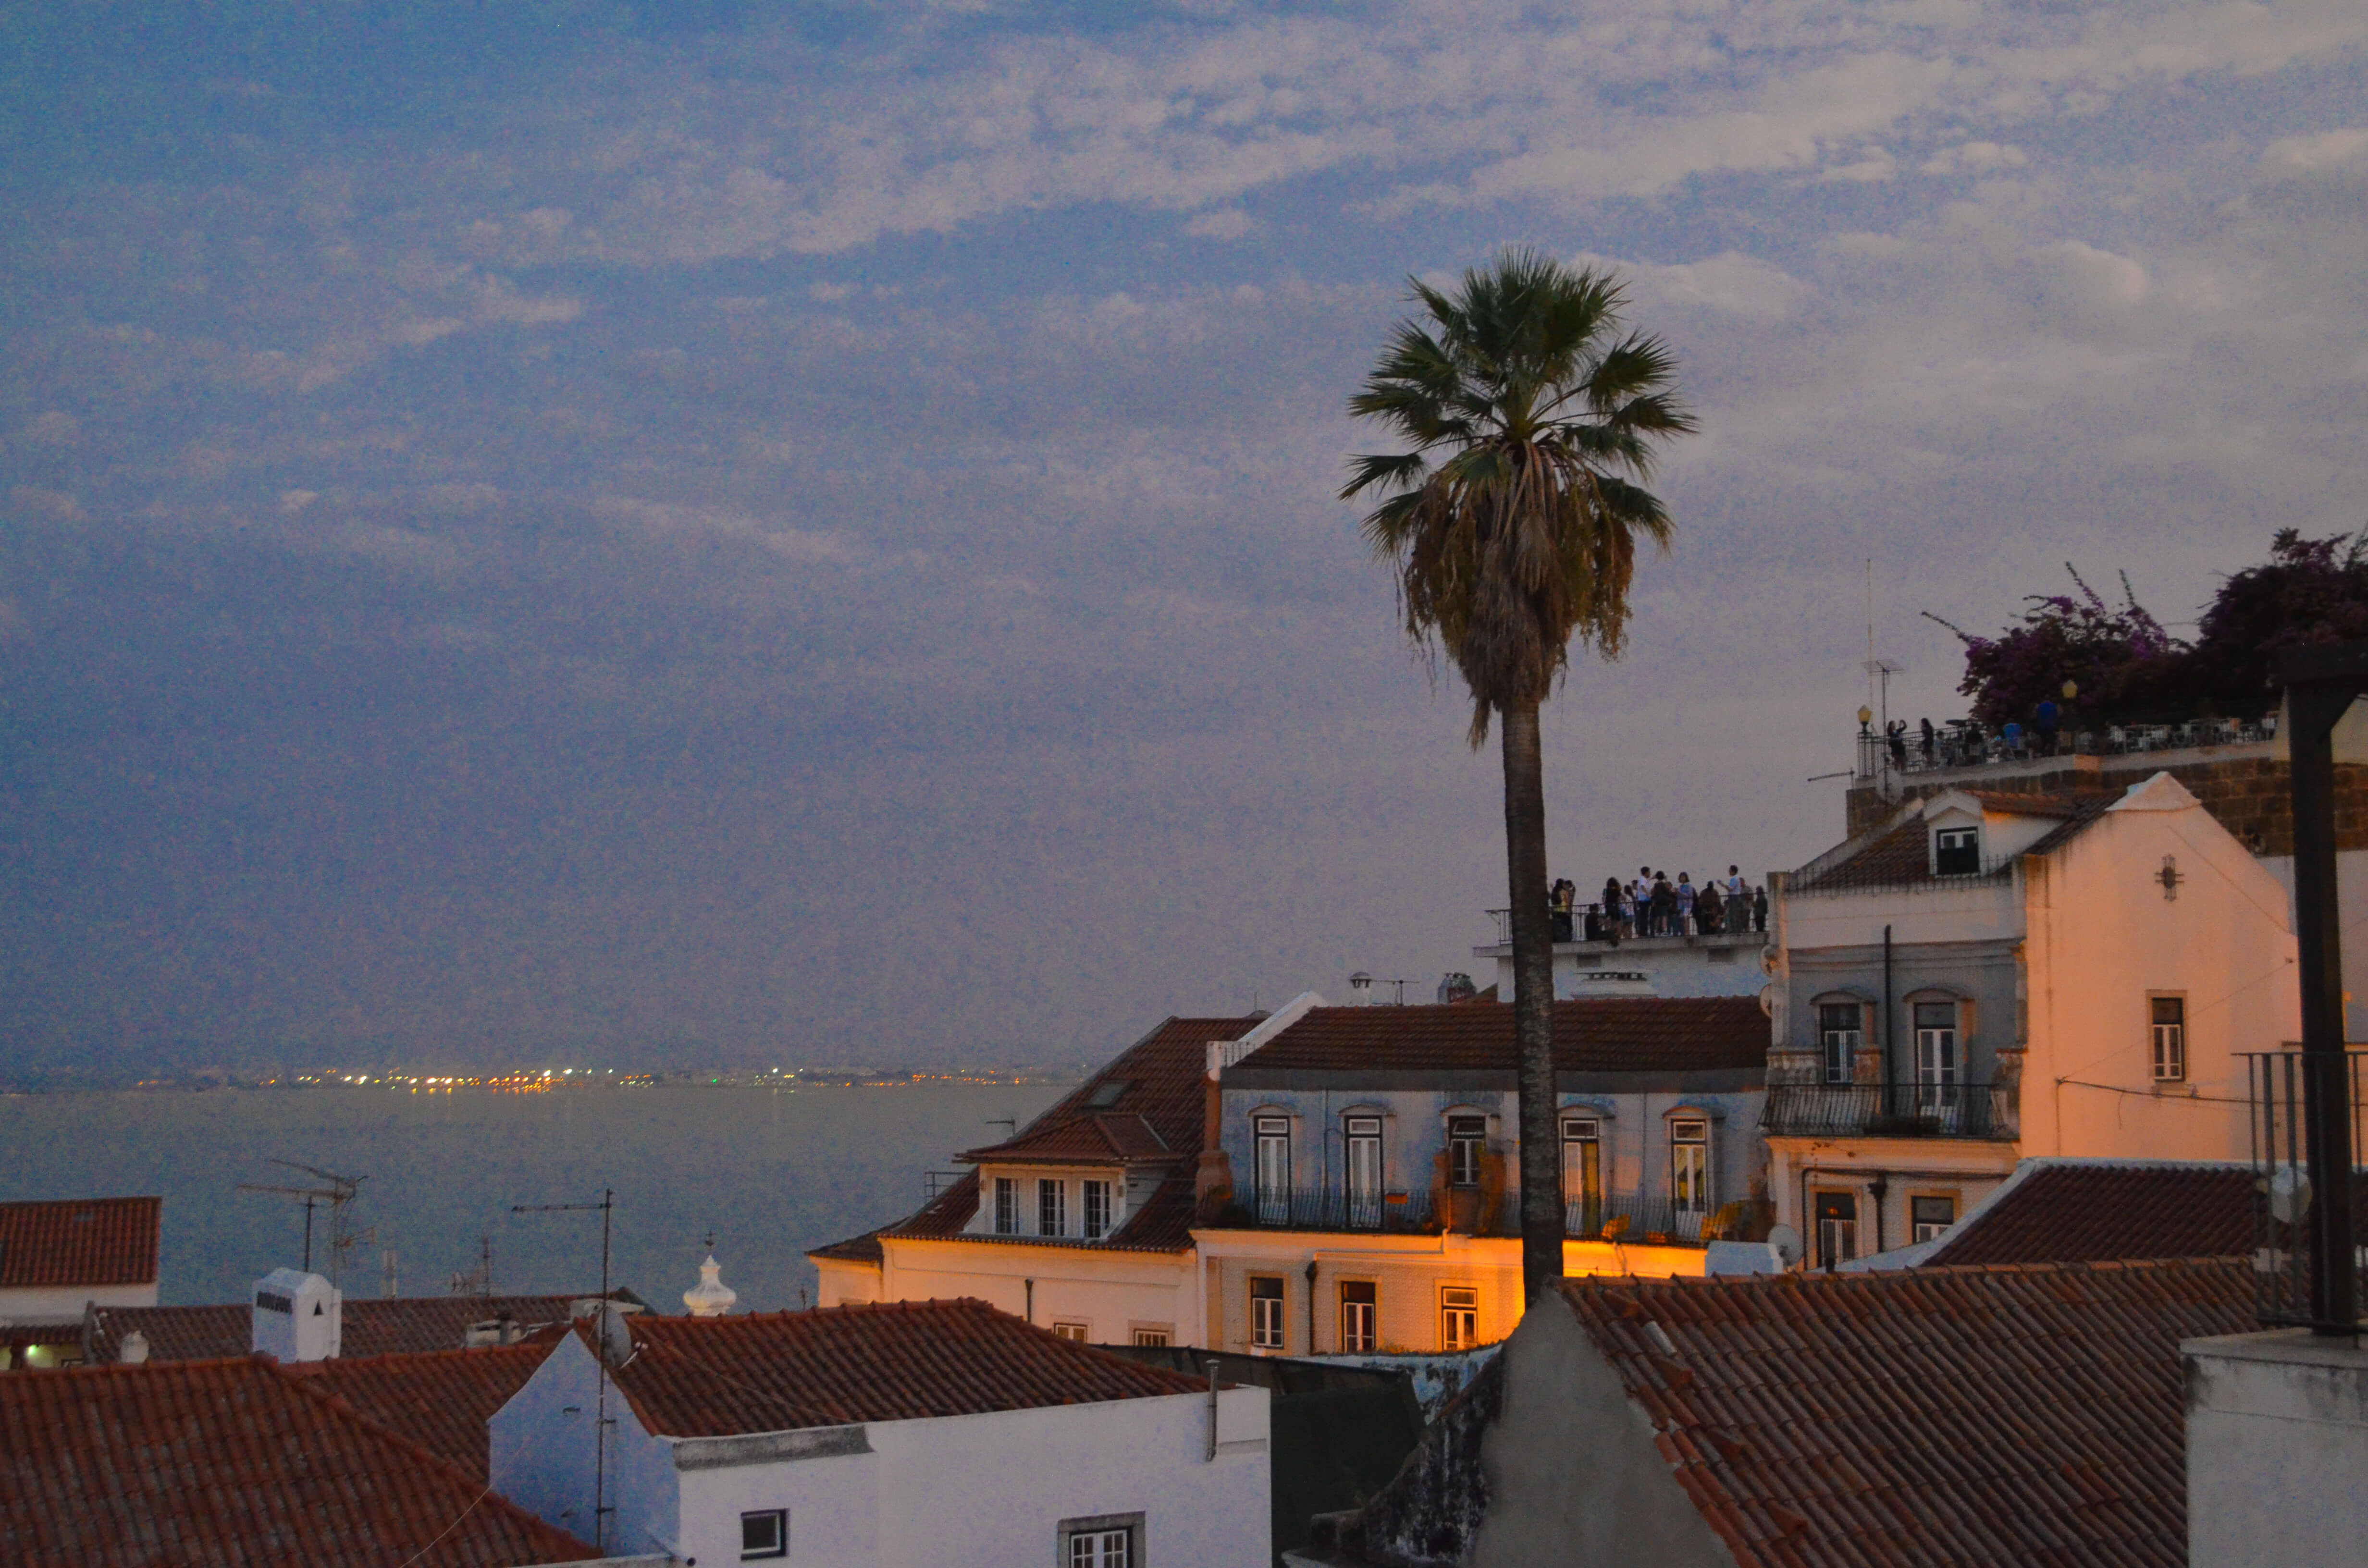 Portas del sol rooftop bar at sunset in Lisbon, Portugal